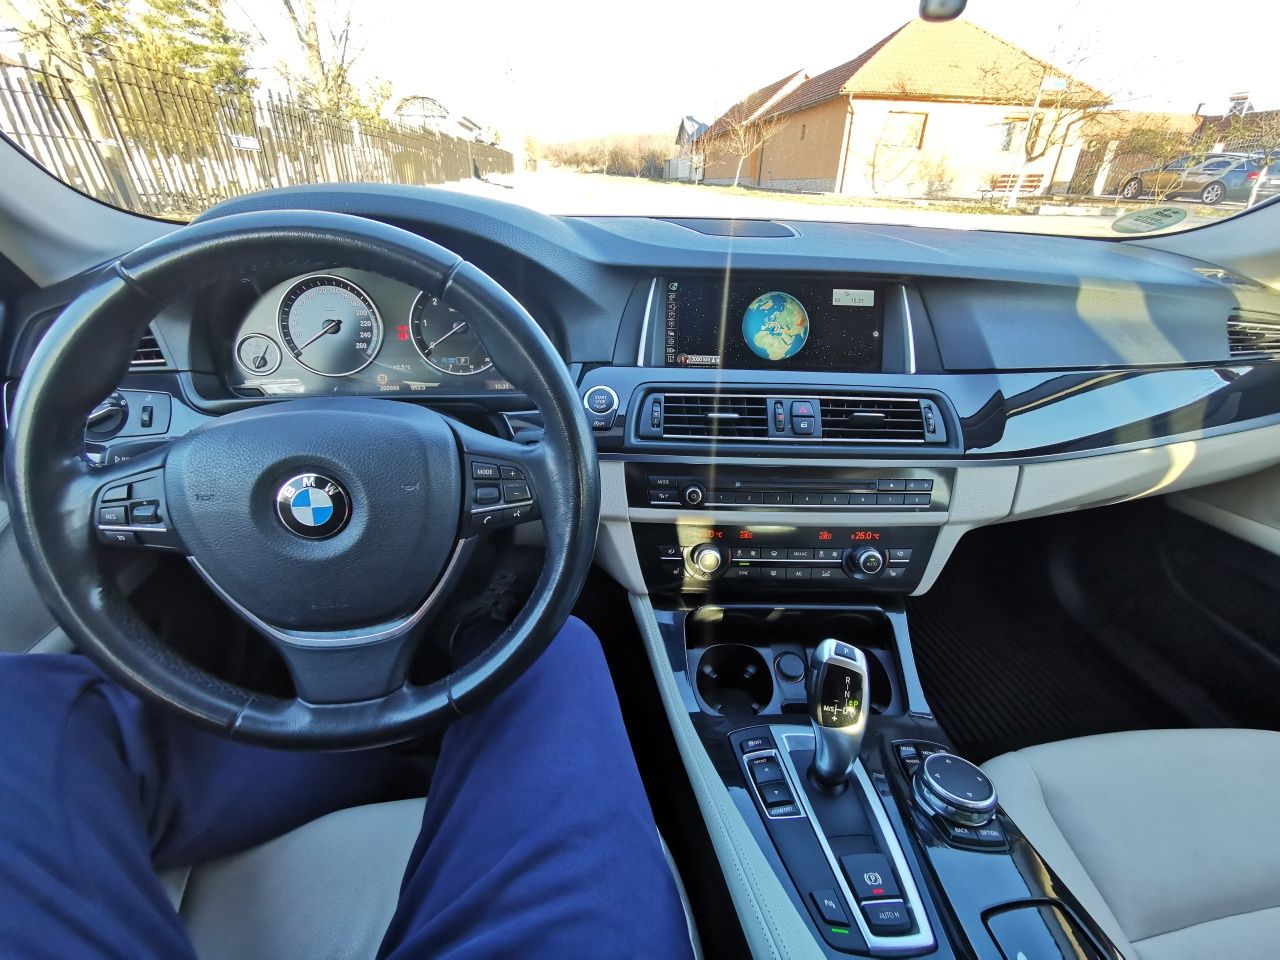 Vând BMW 520 190cp, automat, faruri cornerig adaptive